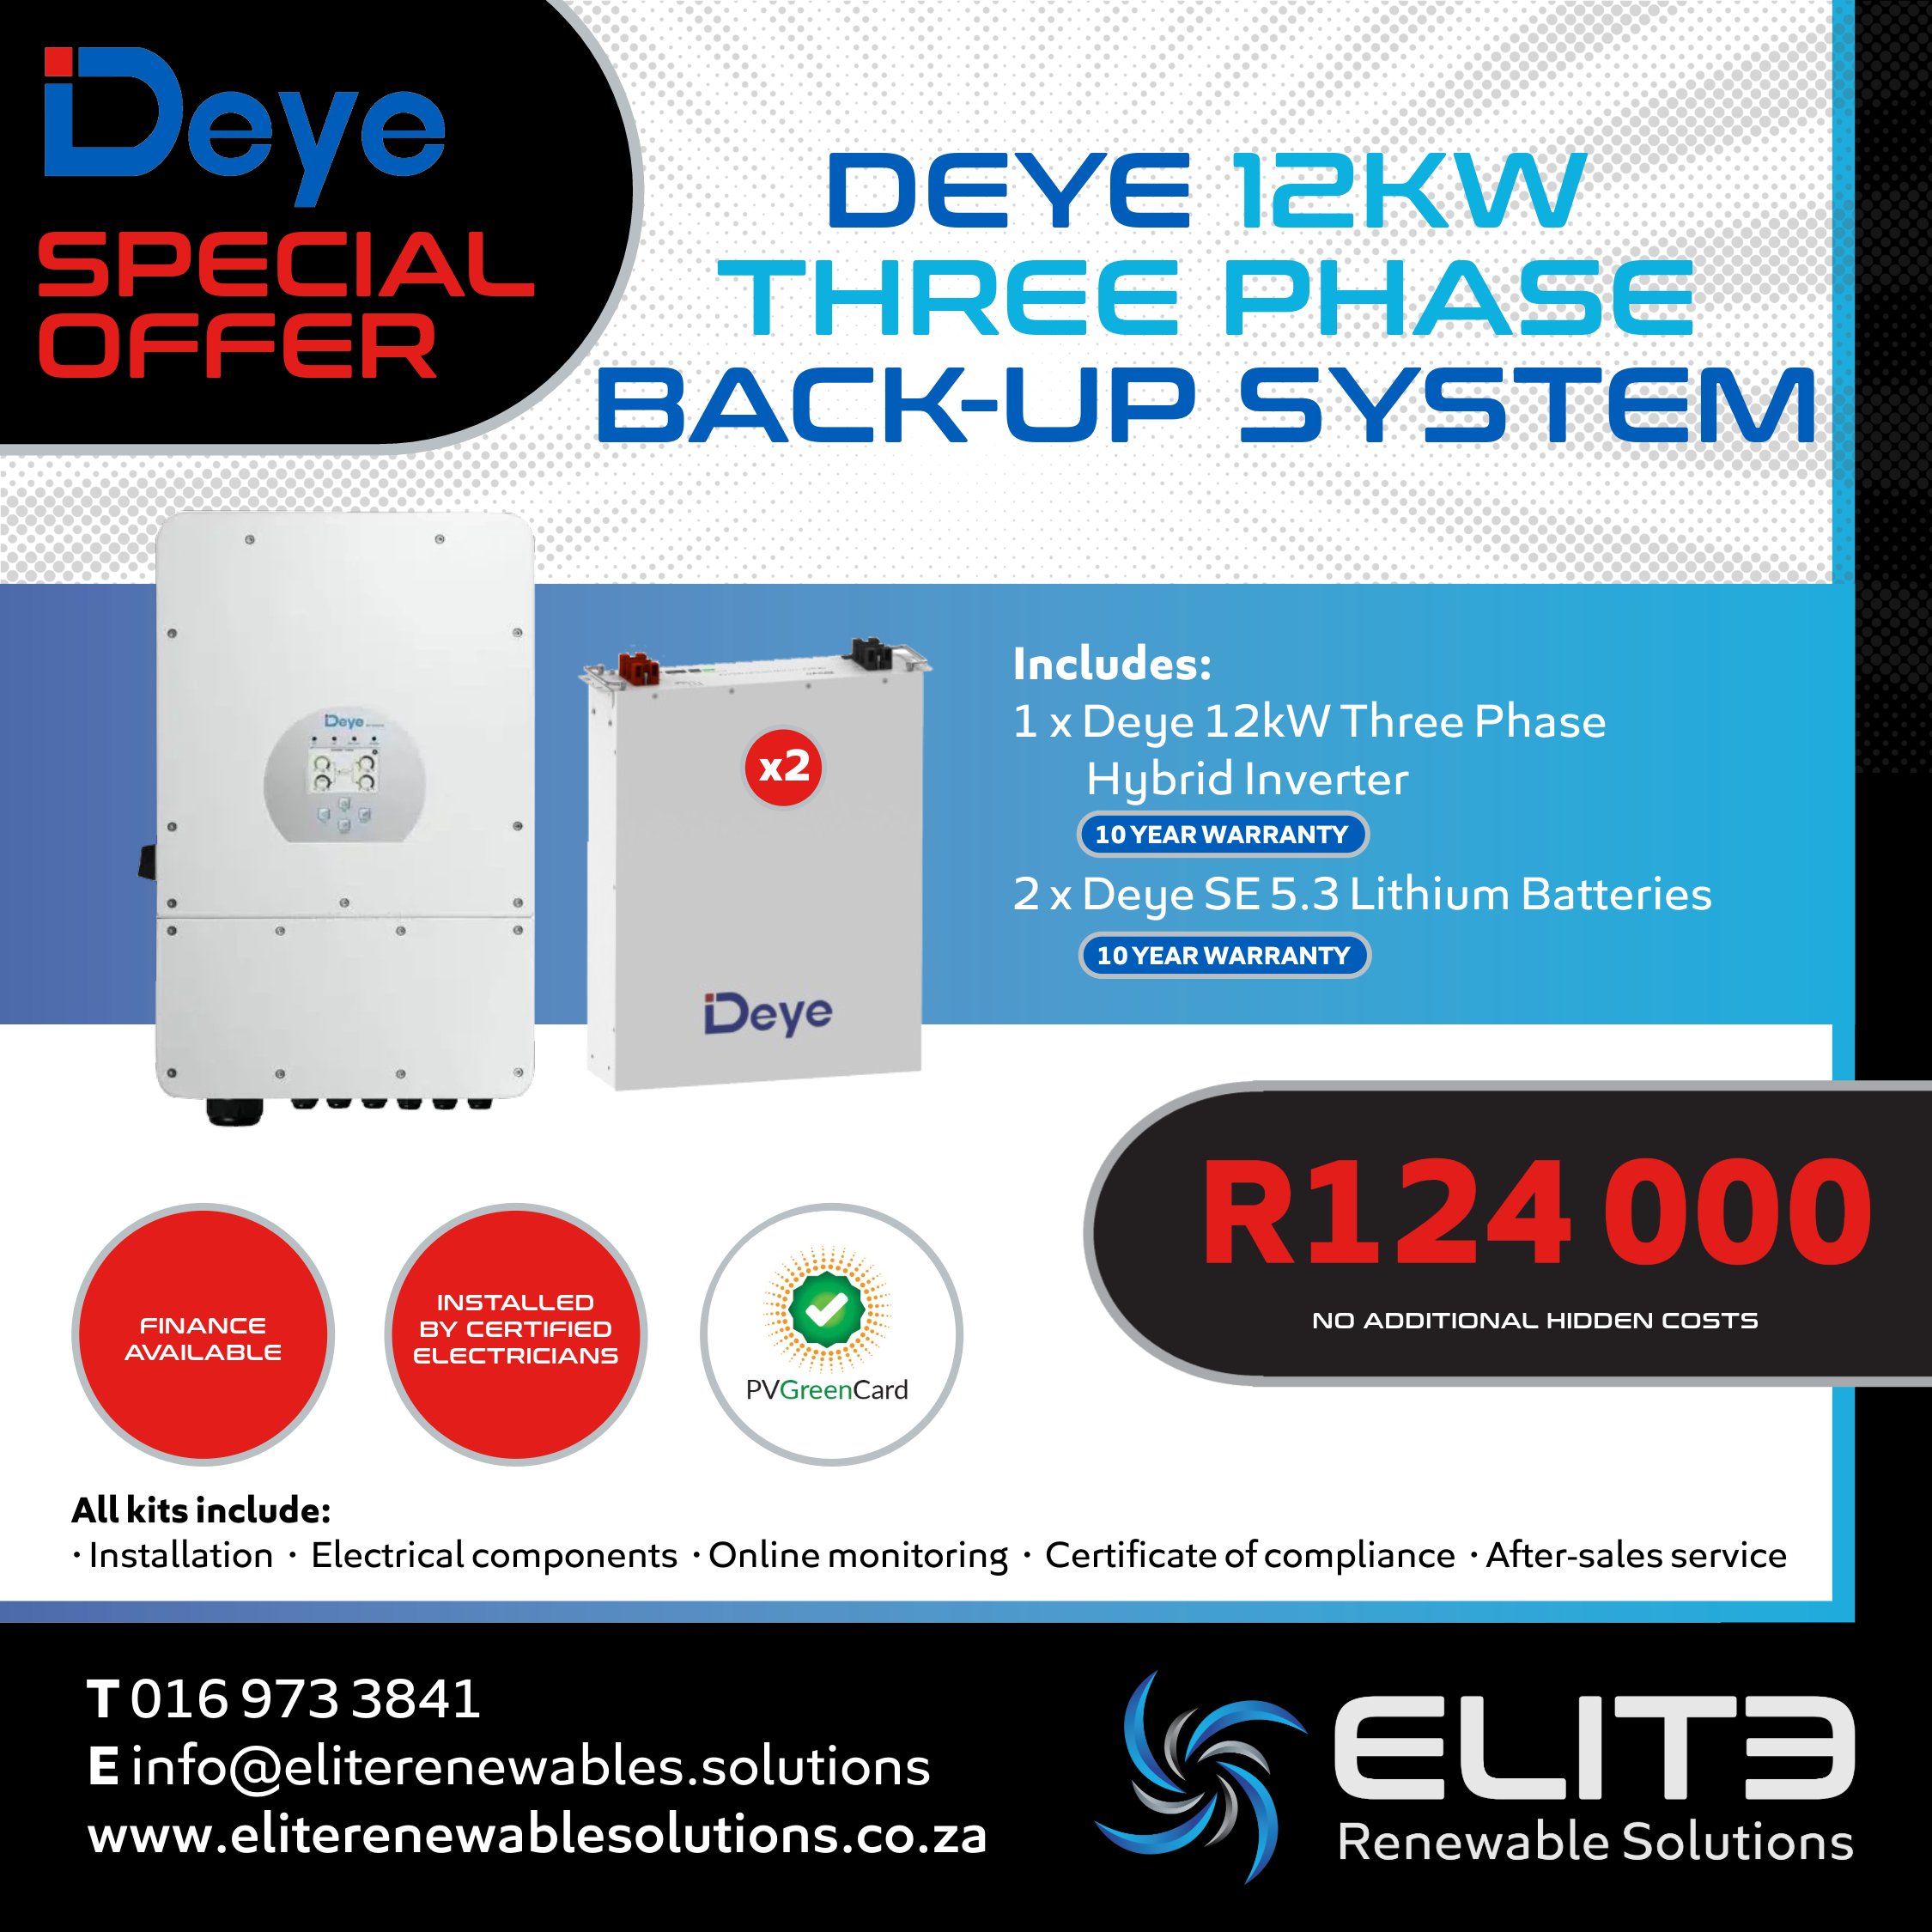 Deye 12Kw Three Phase Back-Up System - Elite Renewable Solutions